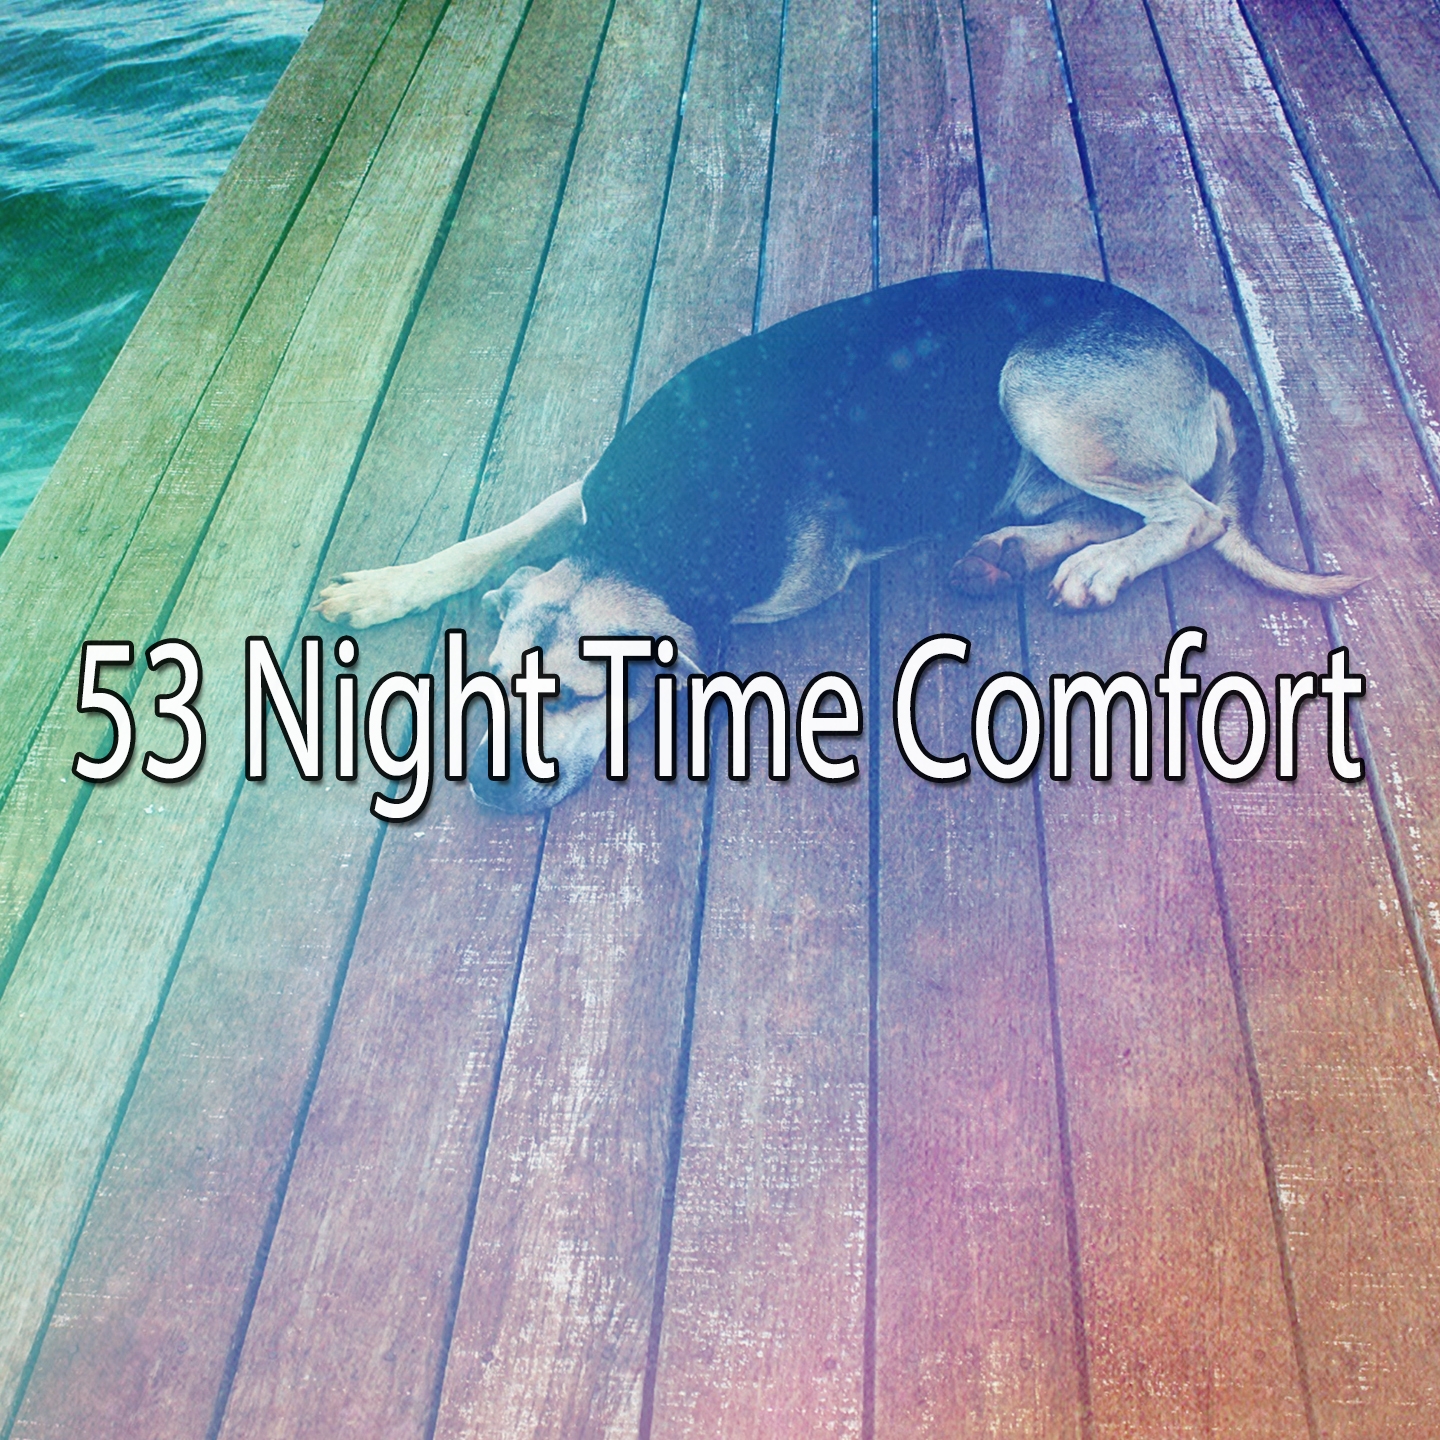 53 Night Time Comfort